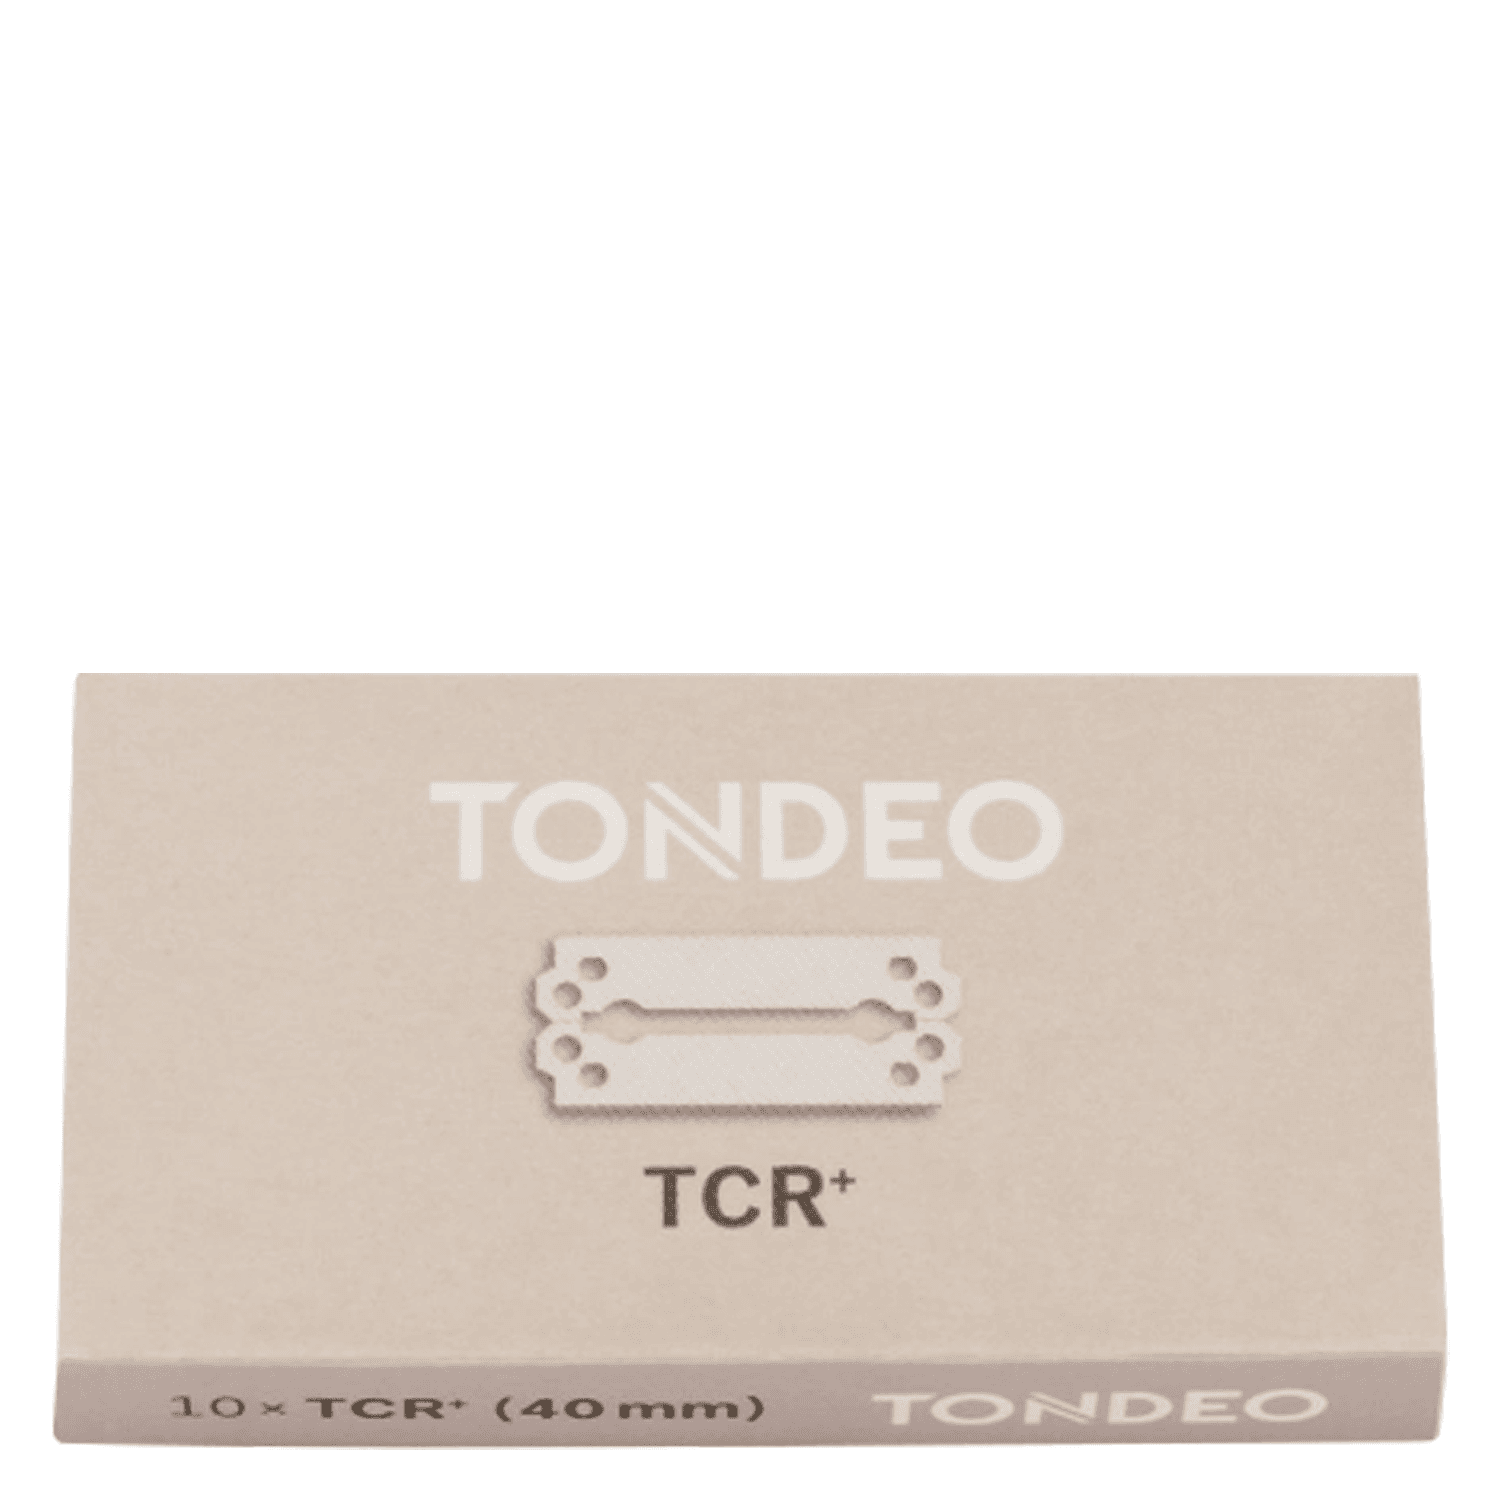 Tondeo Blades - TCR+ Blades